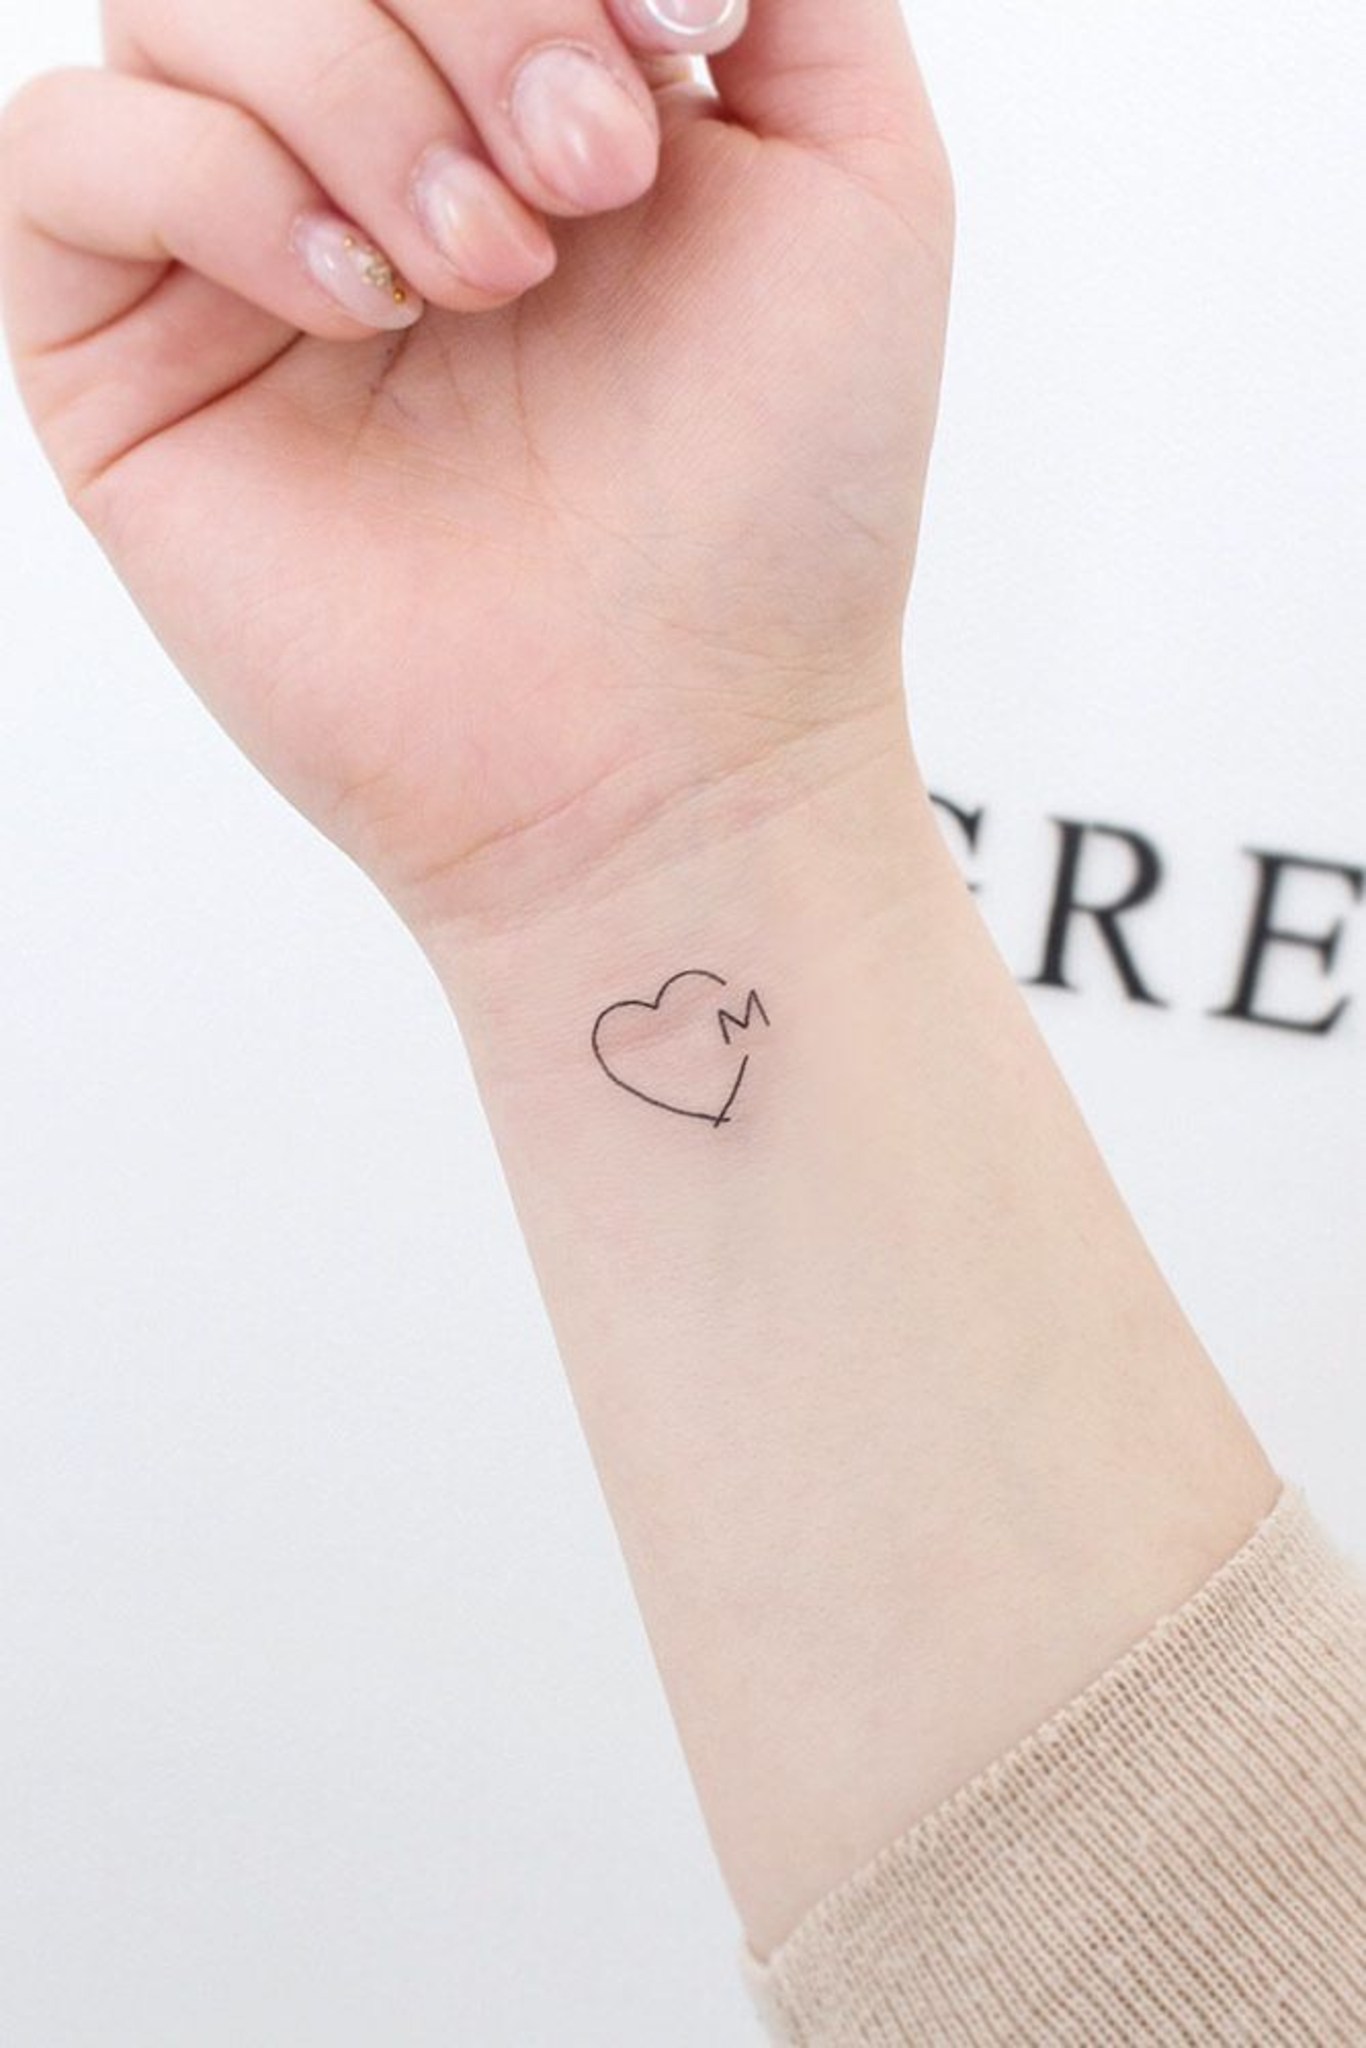 petit tatouage discret femme inkage minimaliste coeur lettre